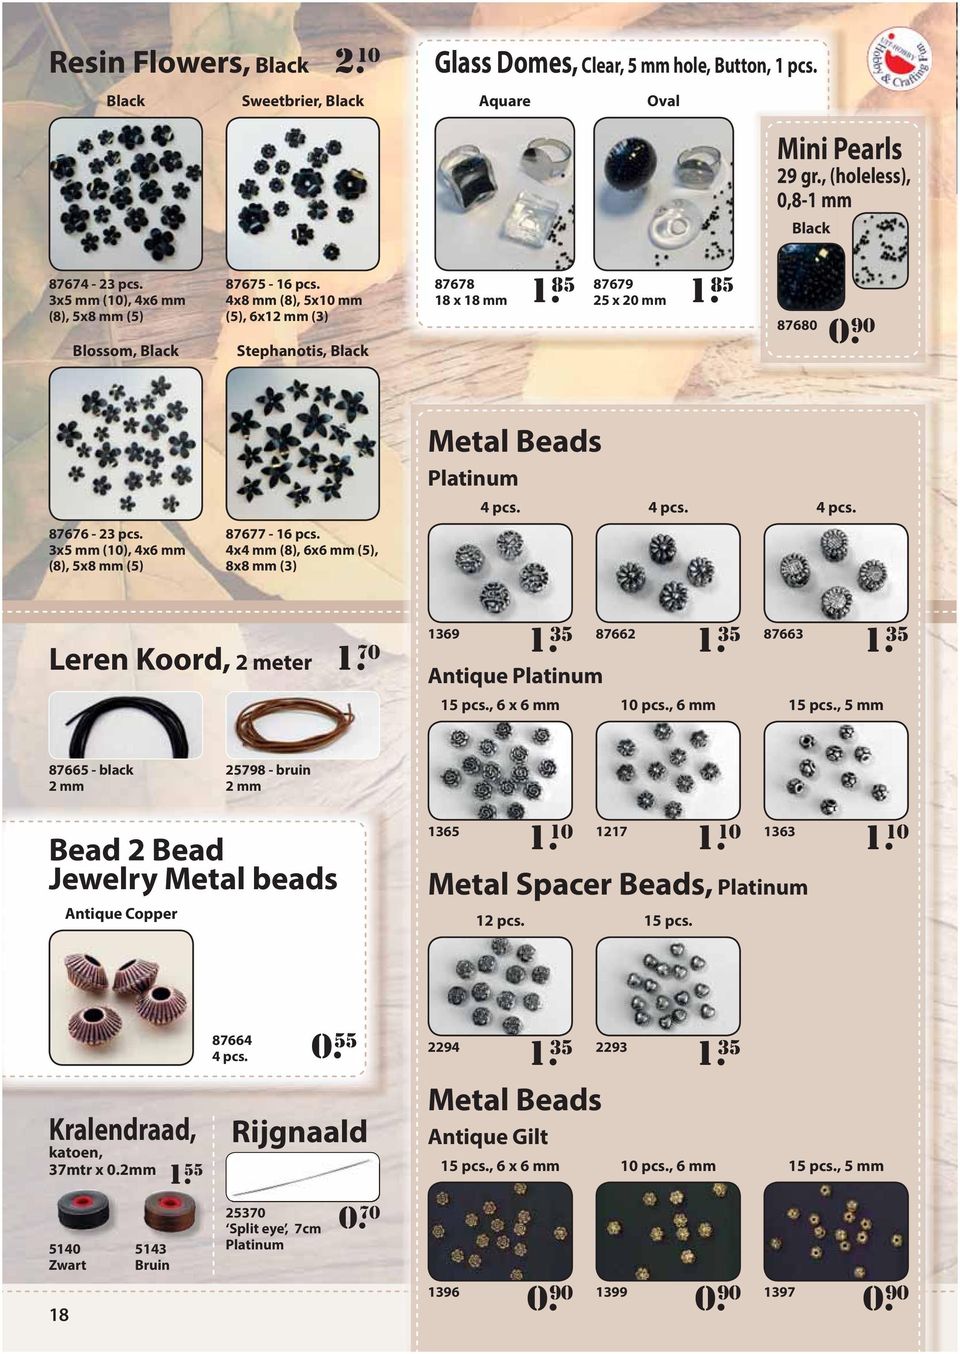 90 Metal Beads Platinum 4 pcs. 4 pcs. 4 pcs. 87676-23 pcs. 3x5 mm (10), 4x6 mm (8), 5x8 mm (5) 87677-16 pcs. 4x4 mm (8), 6x6 mm (5), 8x8 mm (3) Leren Koord, 2 meter 1. 70 1369 1.